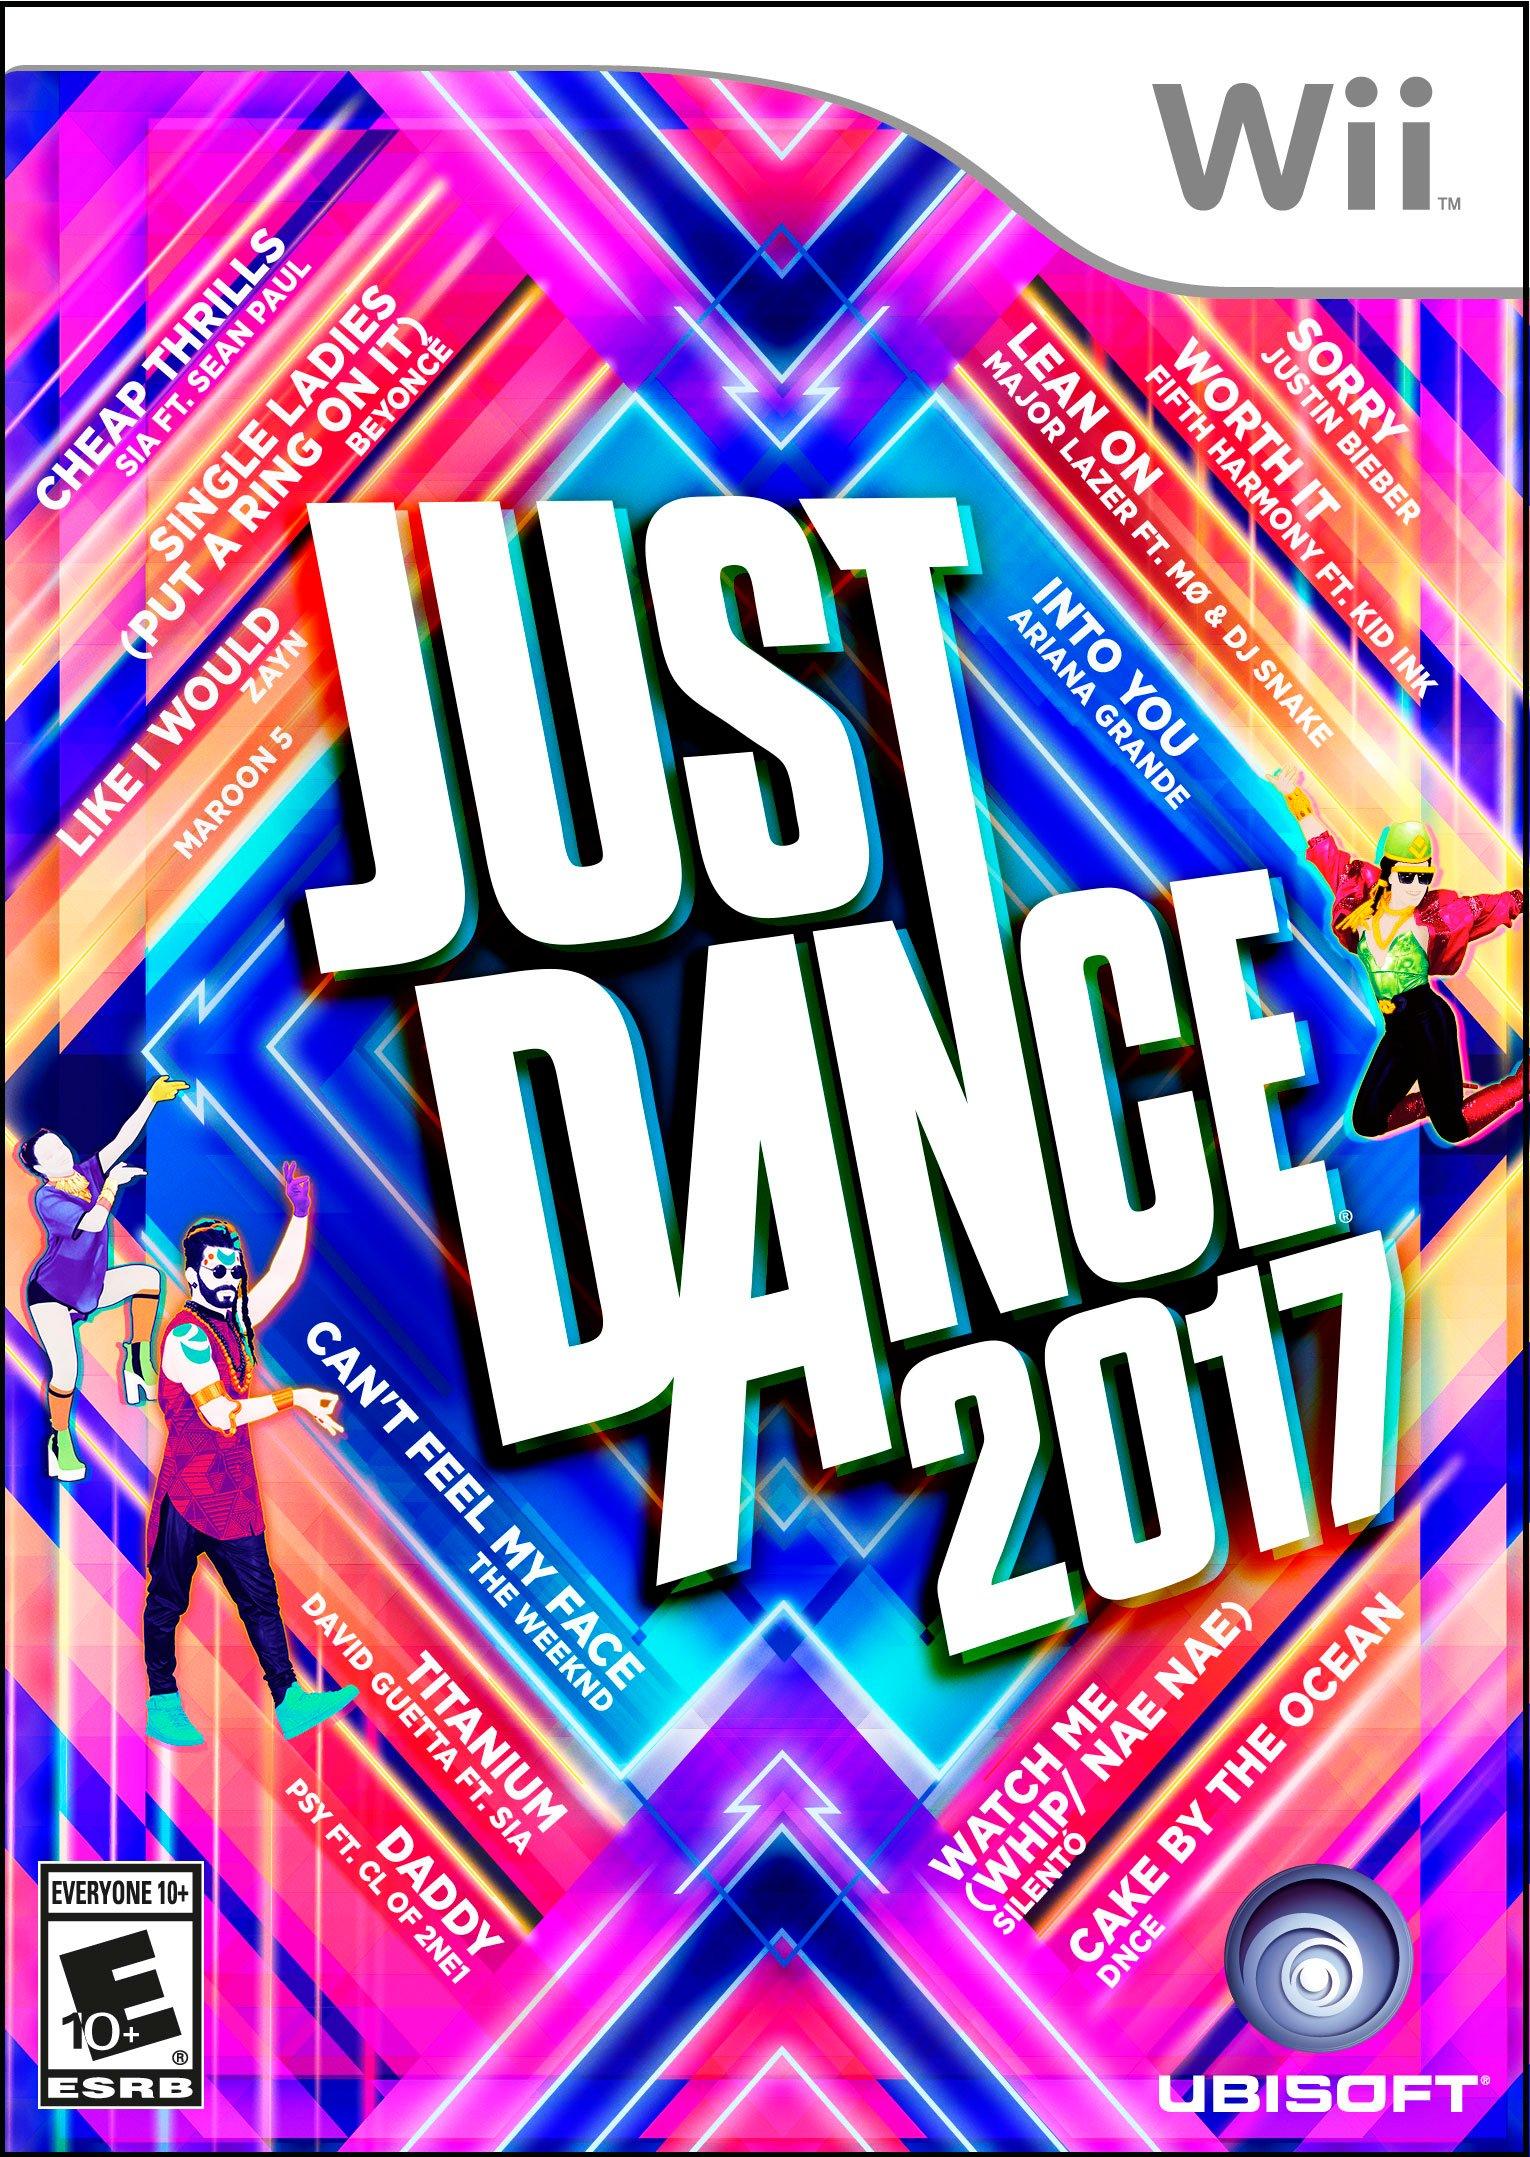 Just Dance 2017 - Nintendo Wii, Pre-Owned -  Ubisoft